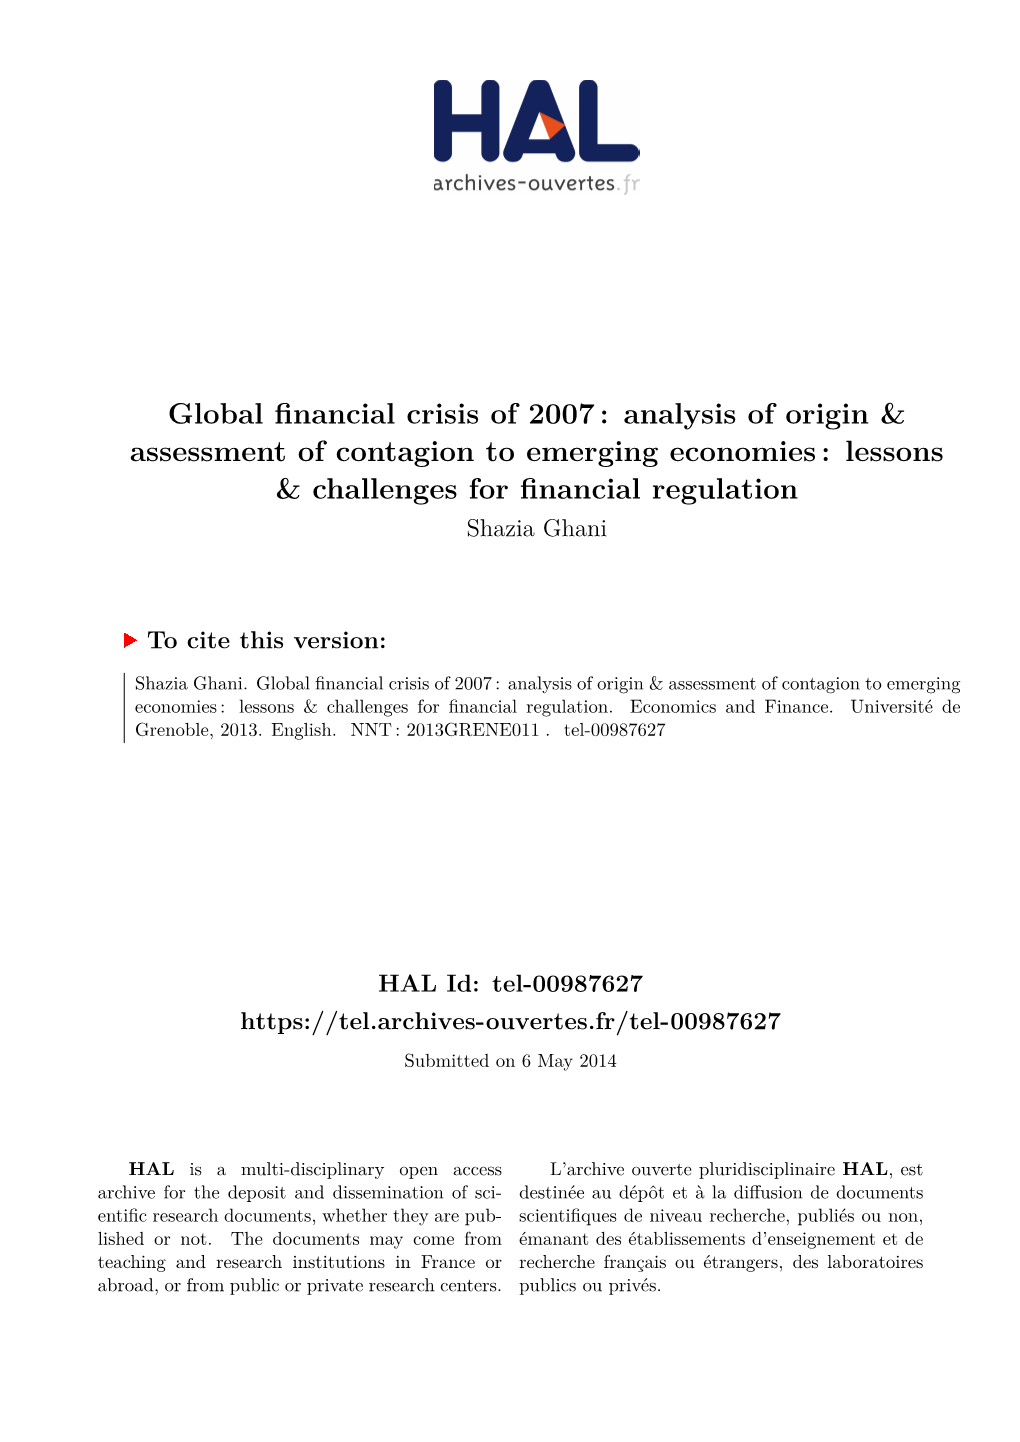 Global Financial Crisis of 2007: Analysis of Origin & Assessment Of